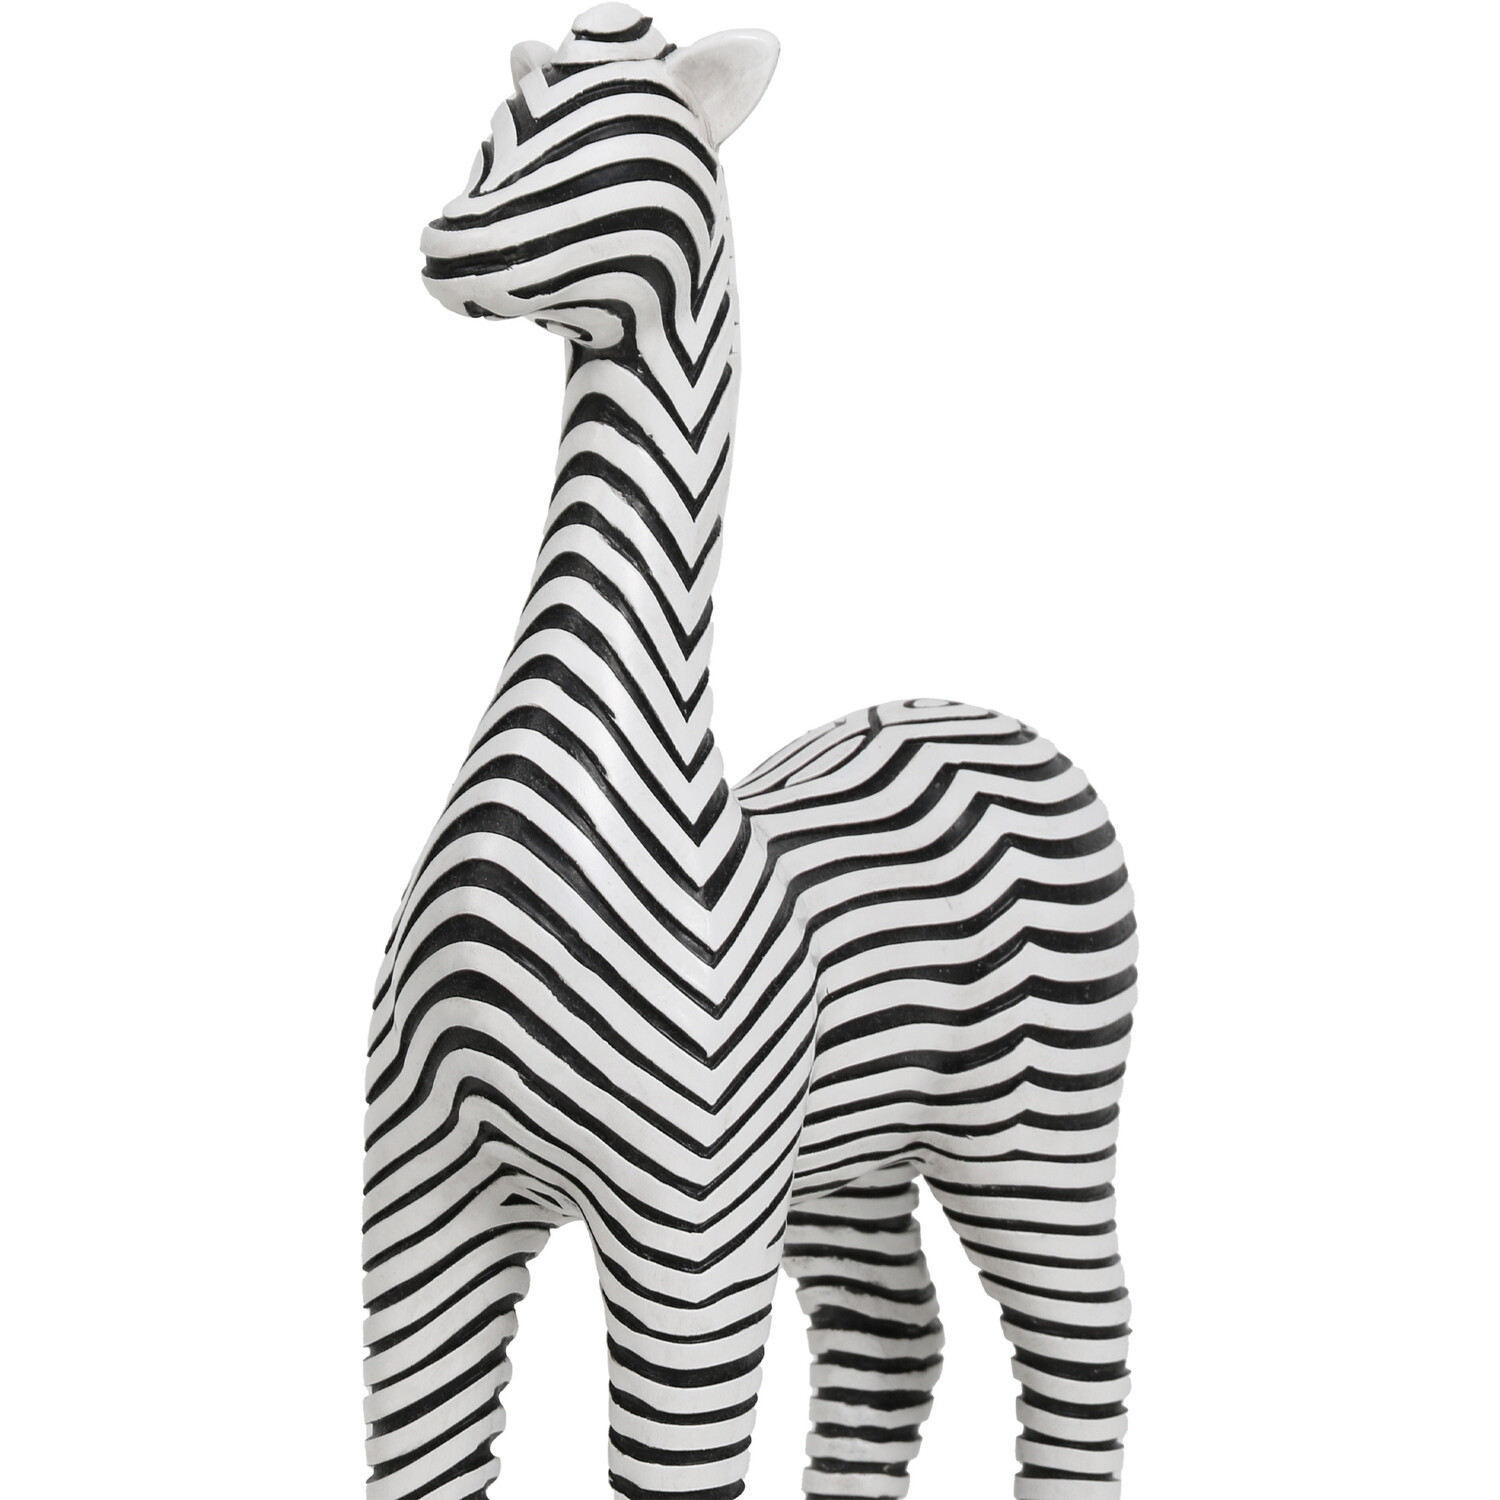 Black and White Zebra Ornament Image 4